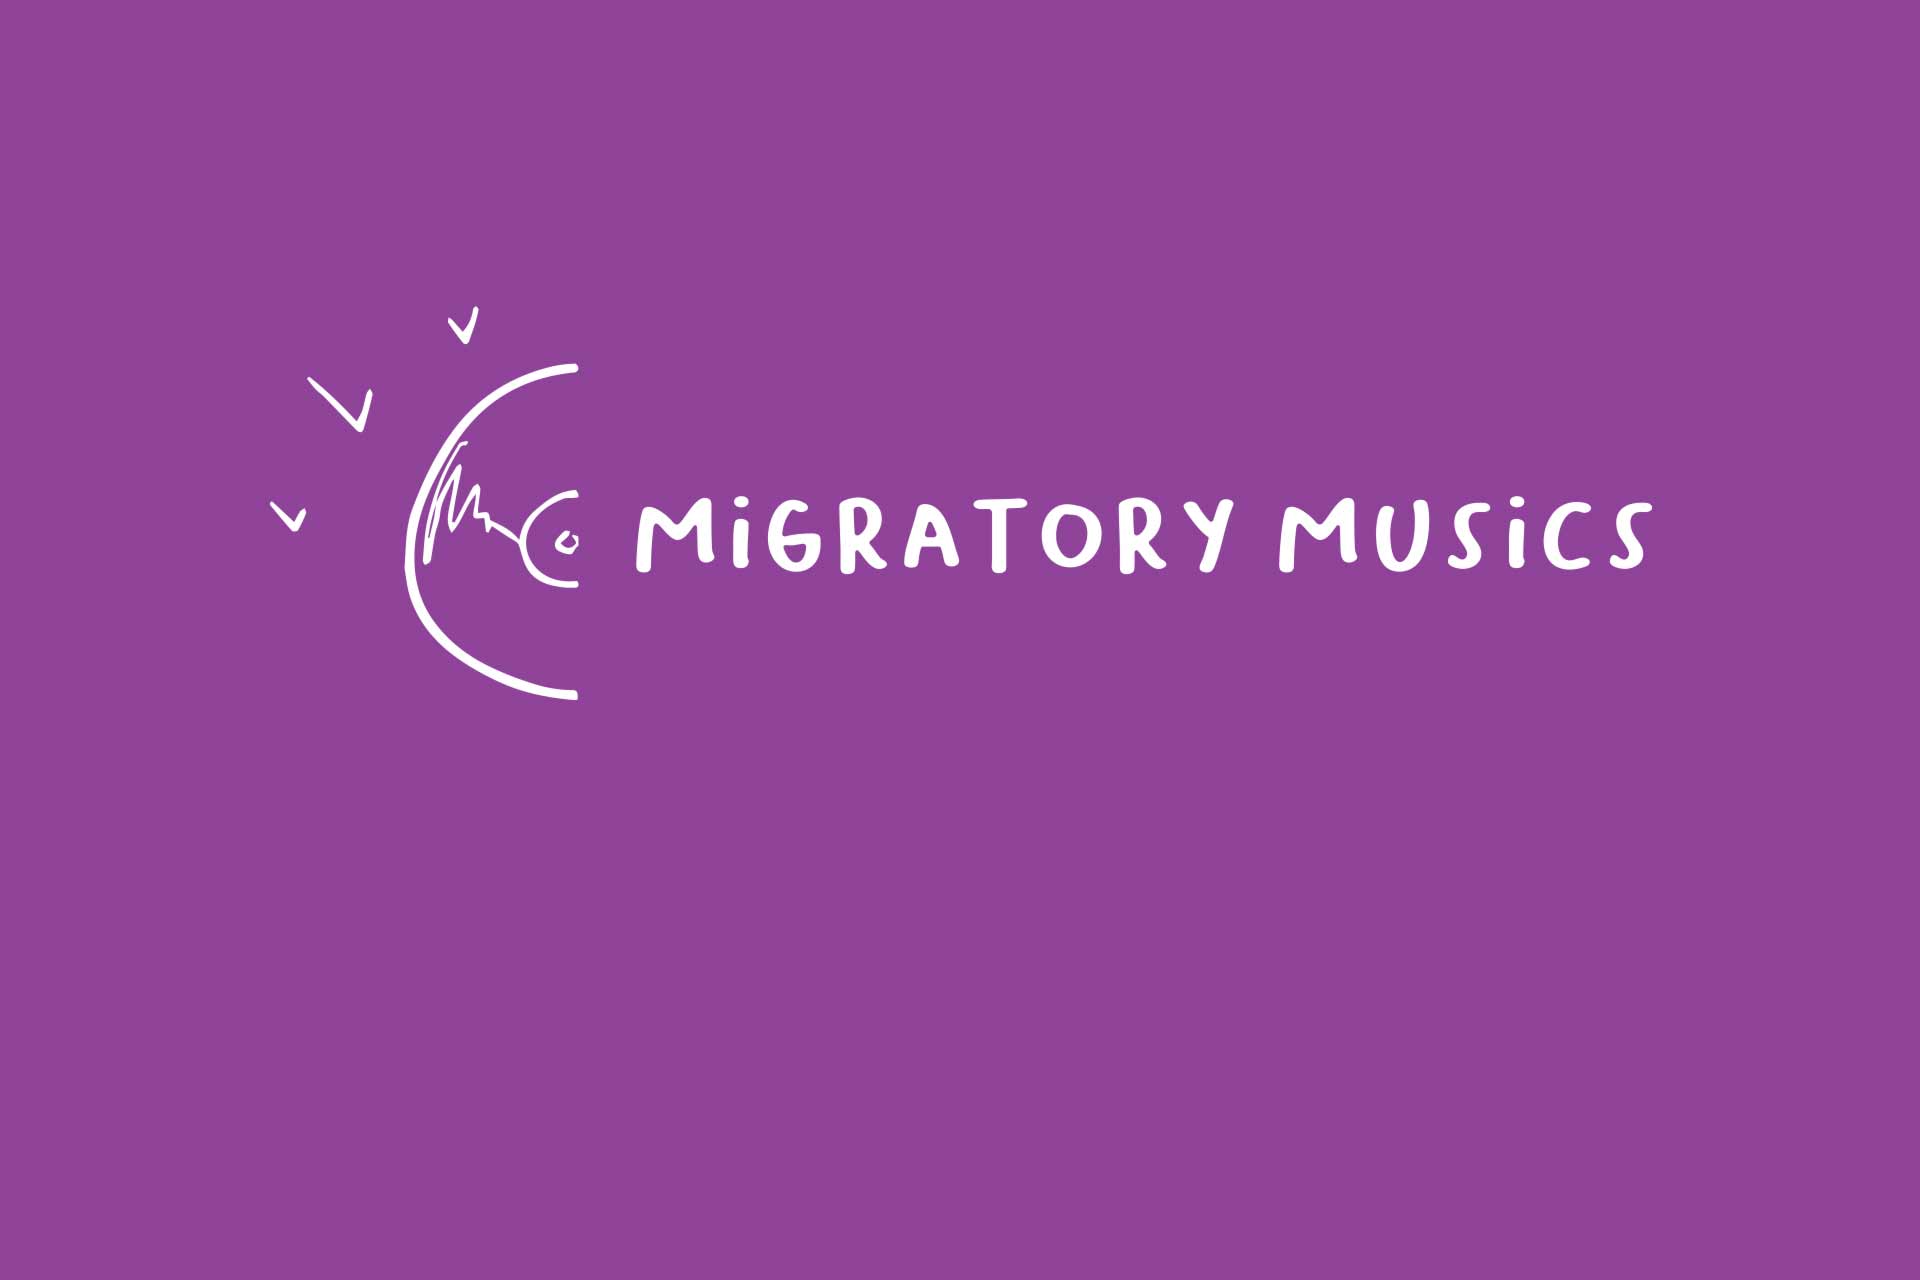 Migratory Musics